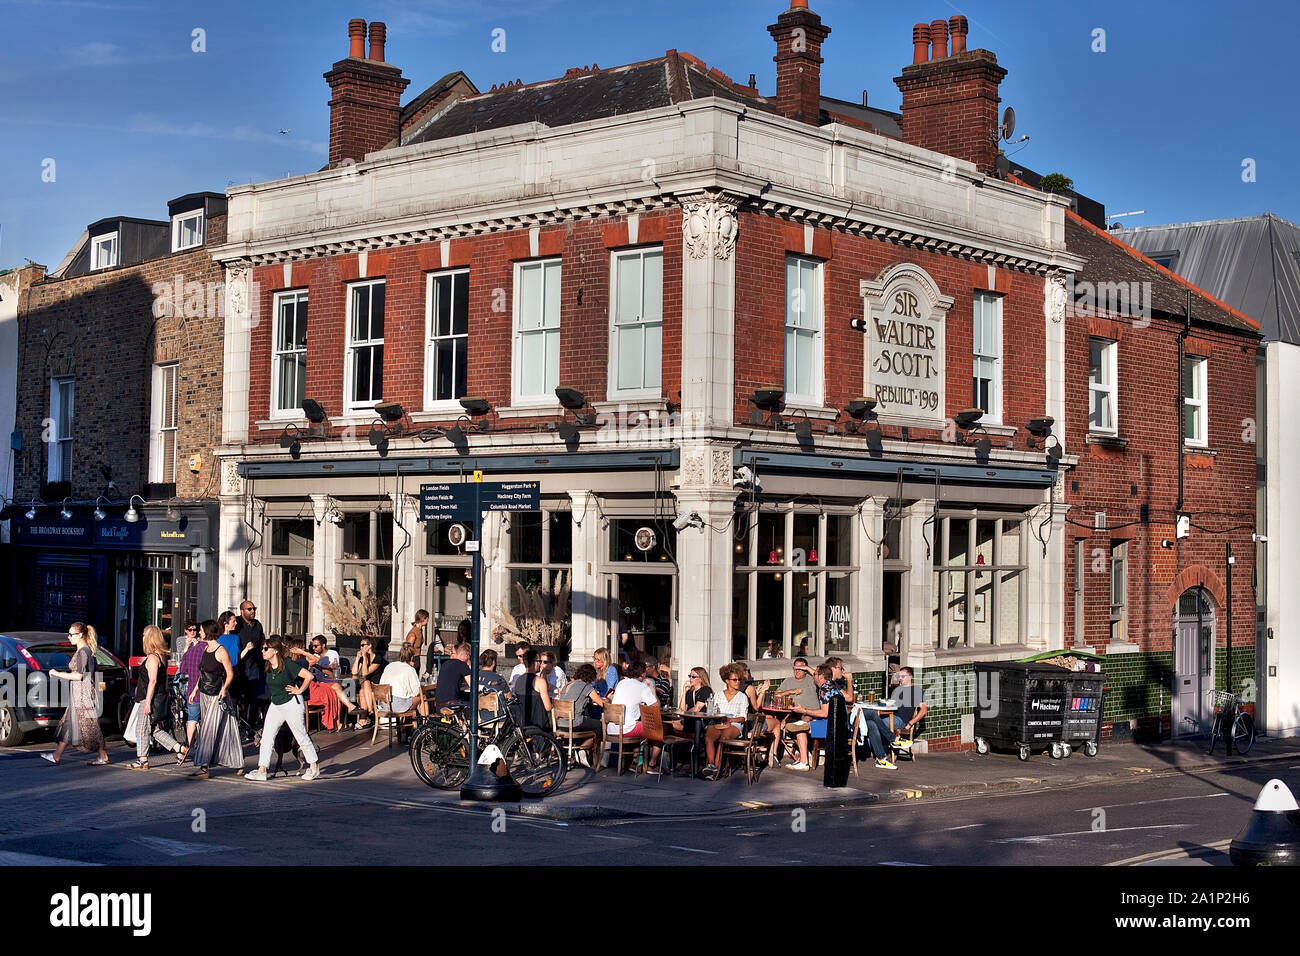 Sir Walter Scott pub, Hackney , London. Stock Photo